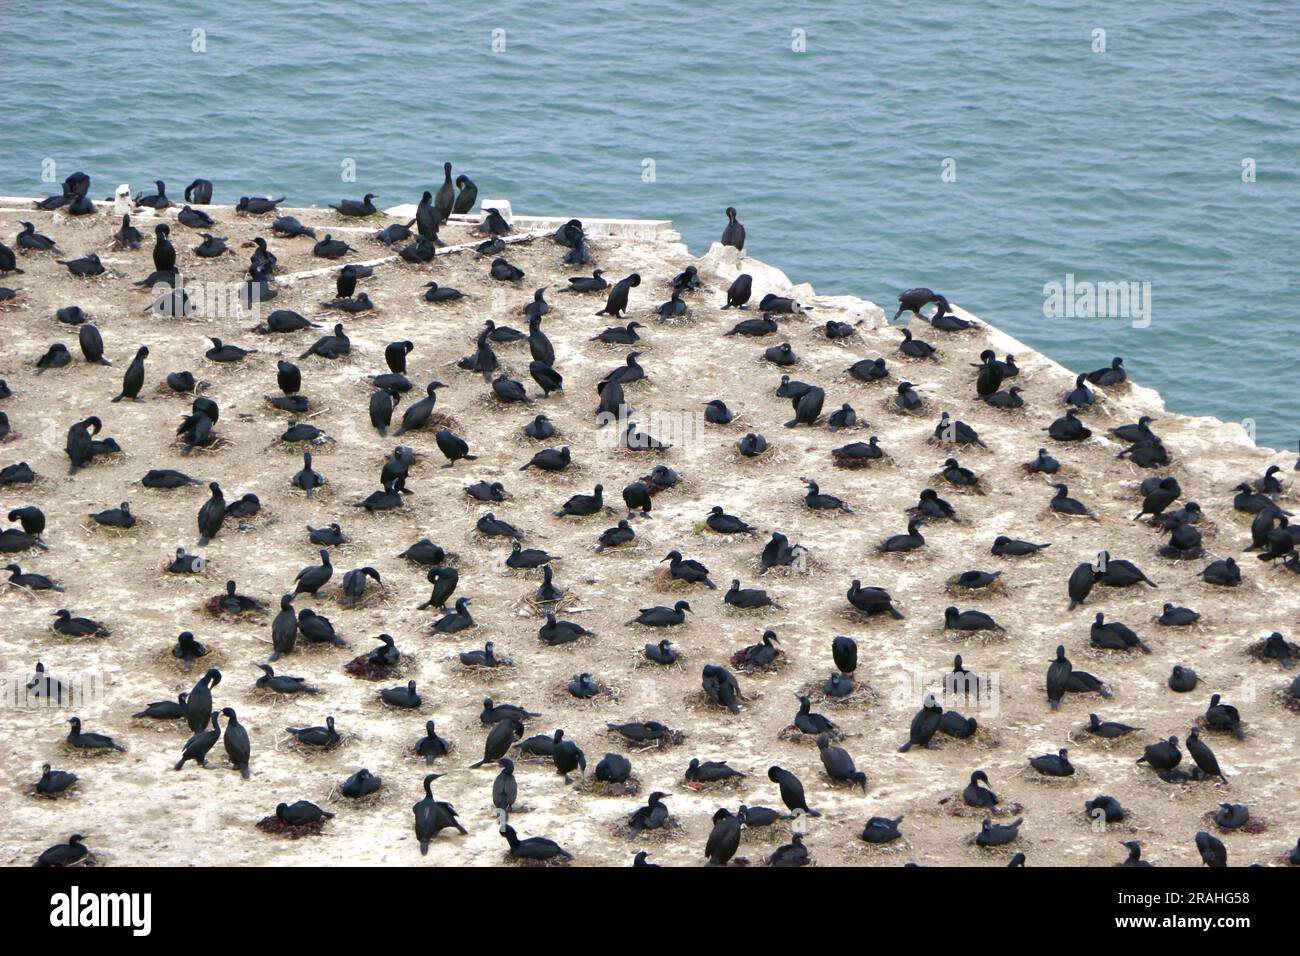 Flock of nesting Brandt's cormorants Urile penicillatus birds on a rocky outcrop Alcatraz Federal Penitentiary San Francisco California USA Stock Photo